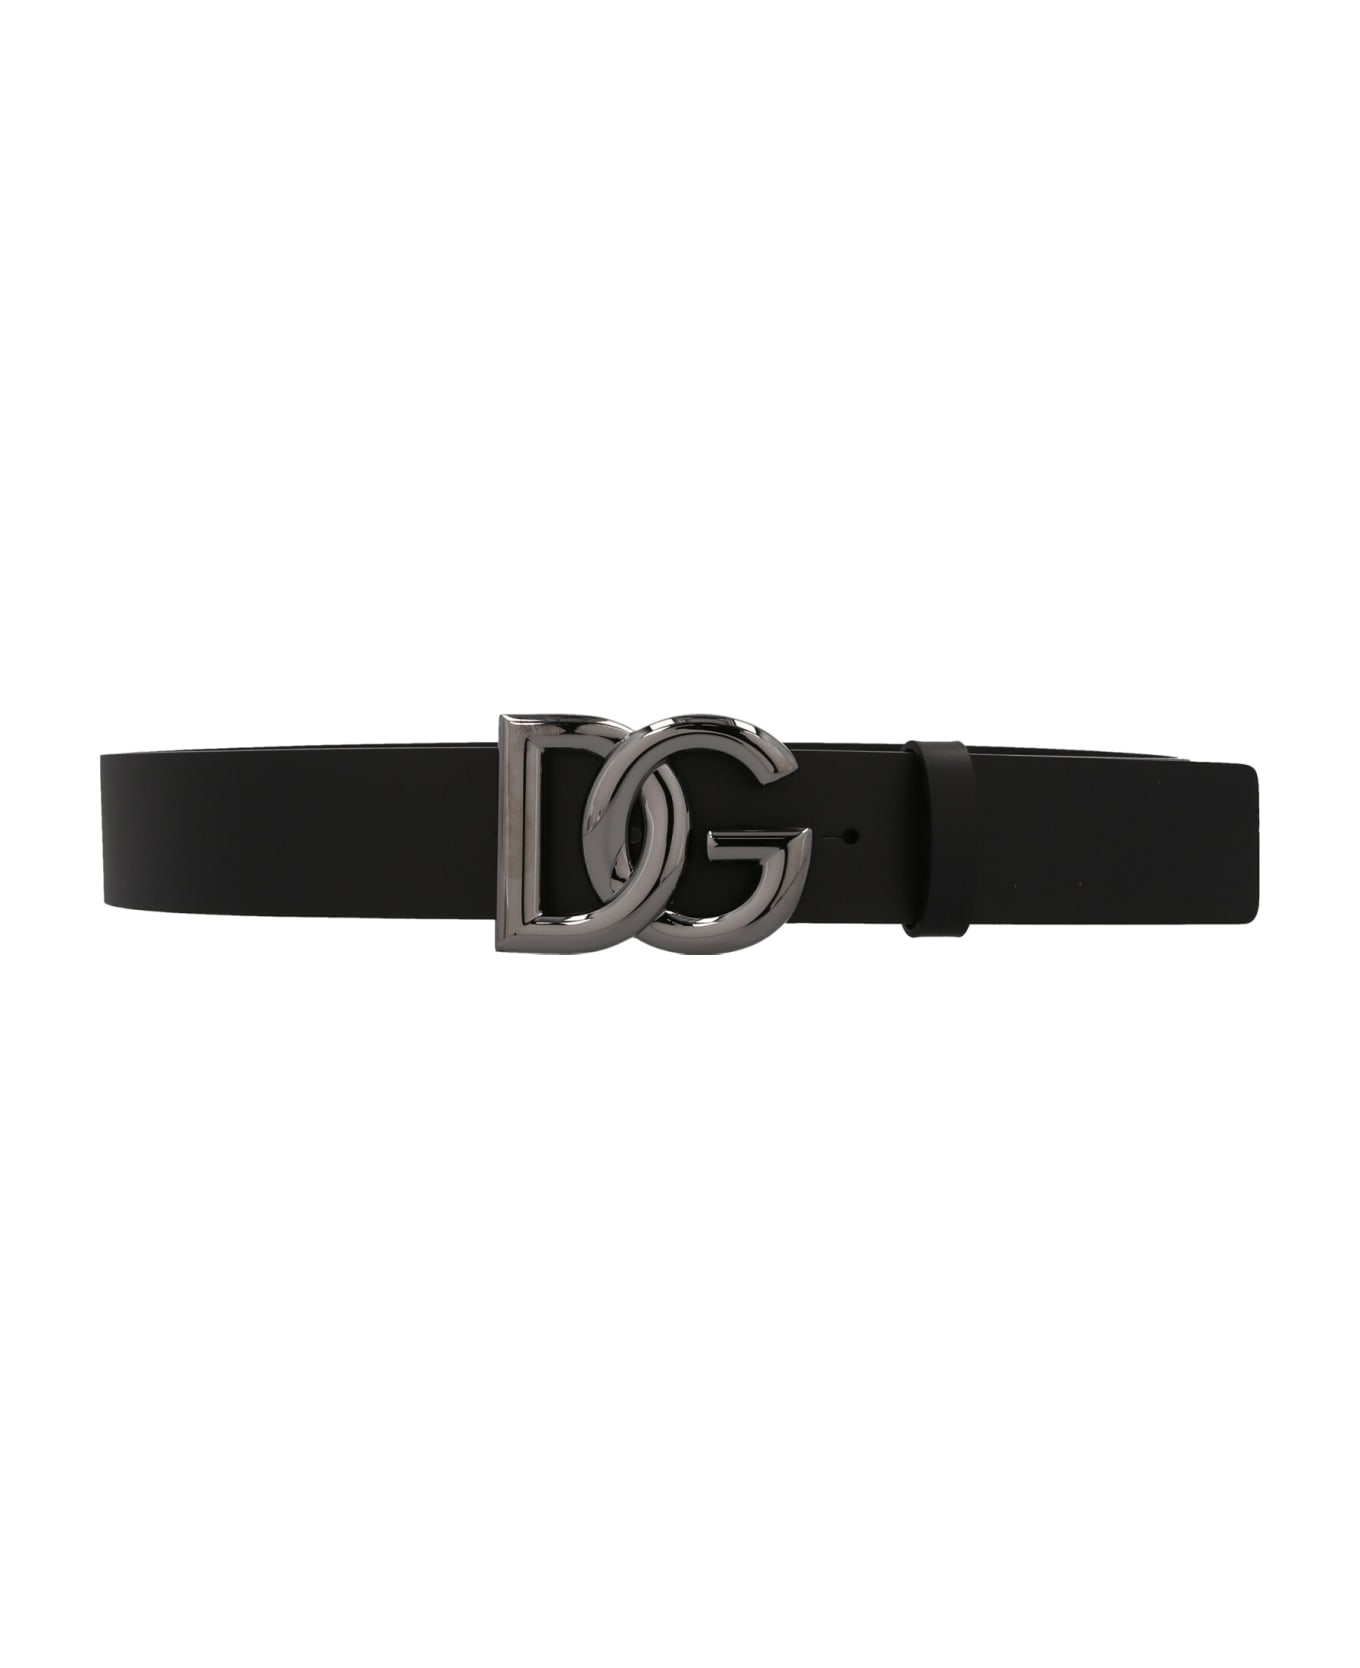 Dolce & Gabbana Logo Belt - Black  